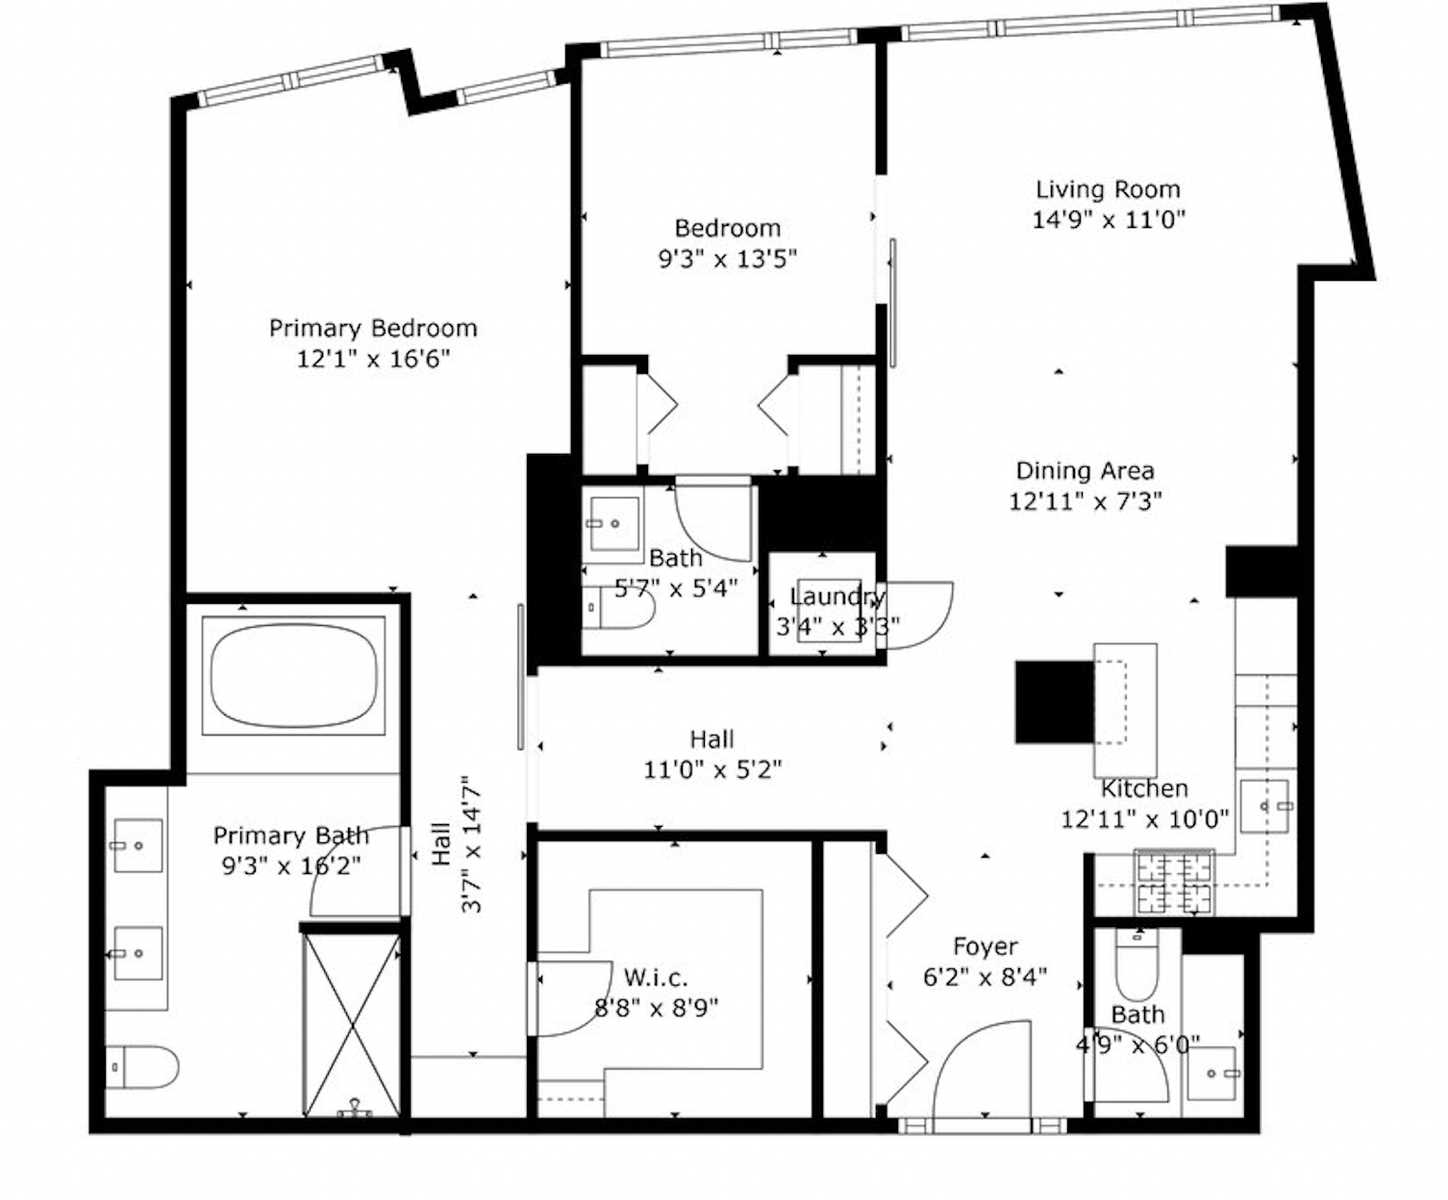 Floorplan for 40 Broad Street, PH-1F